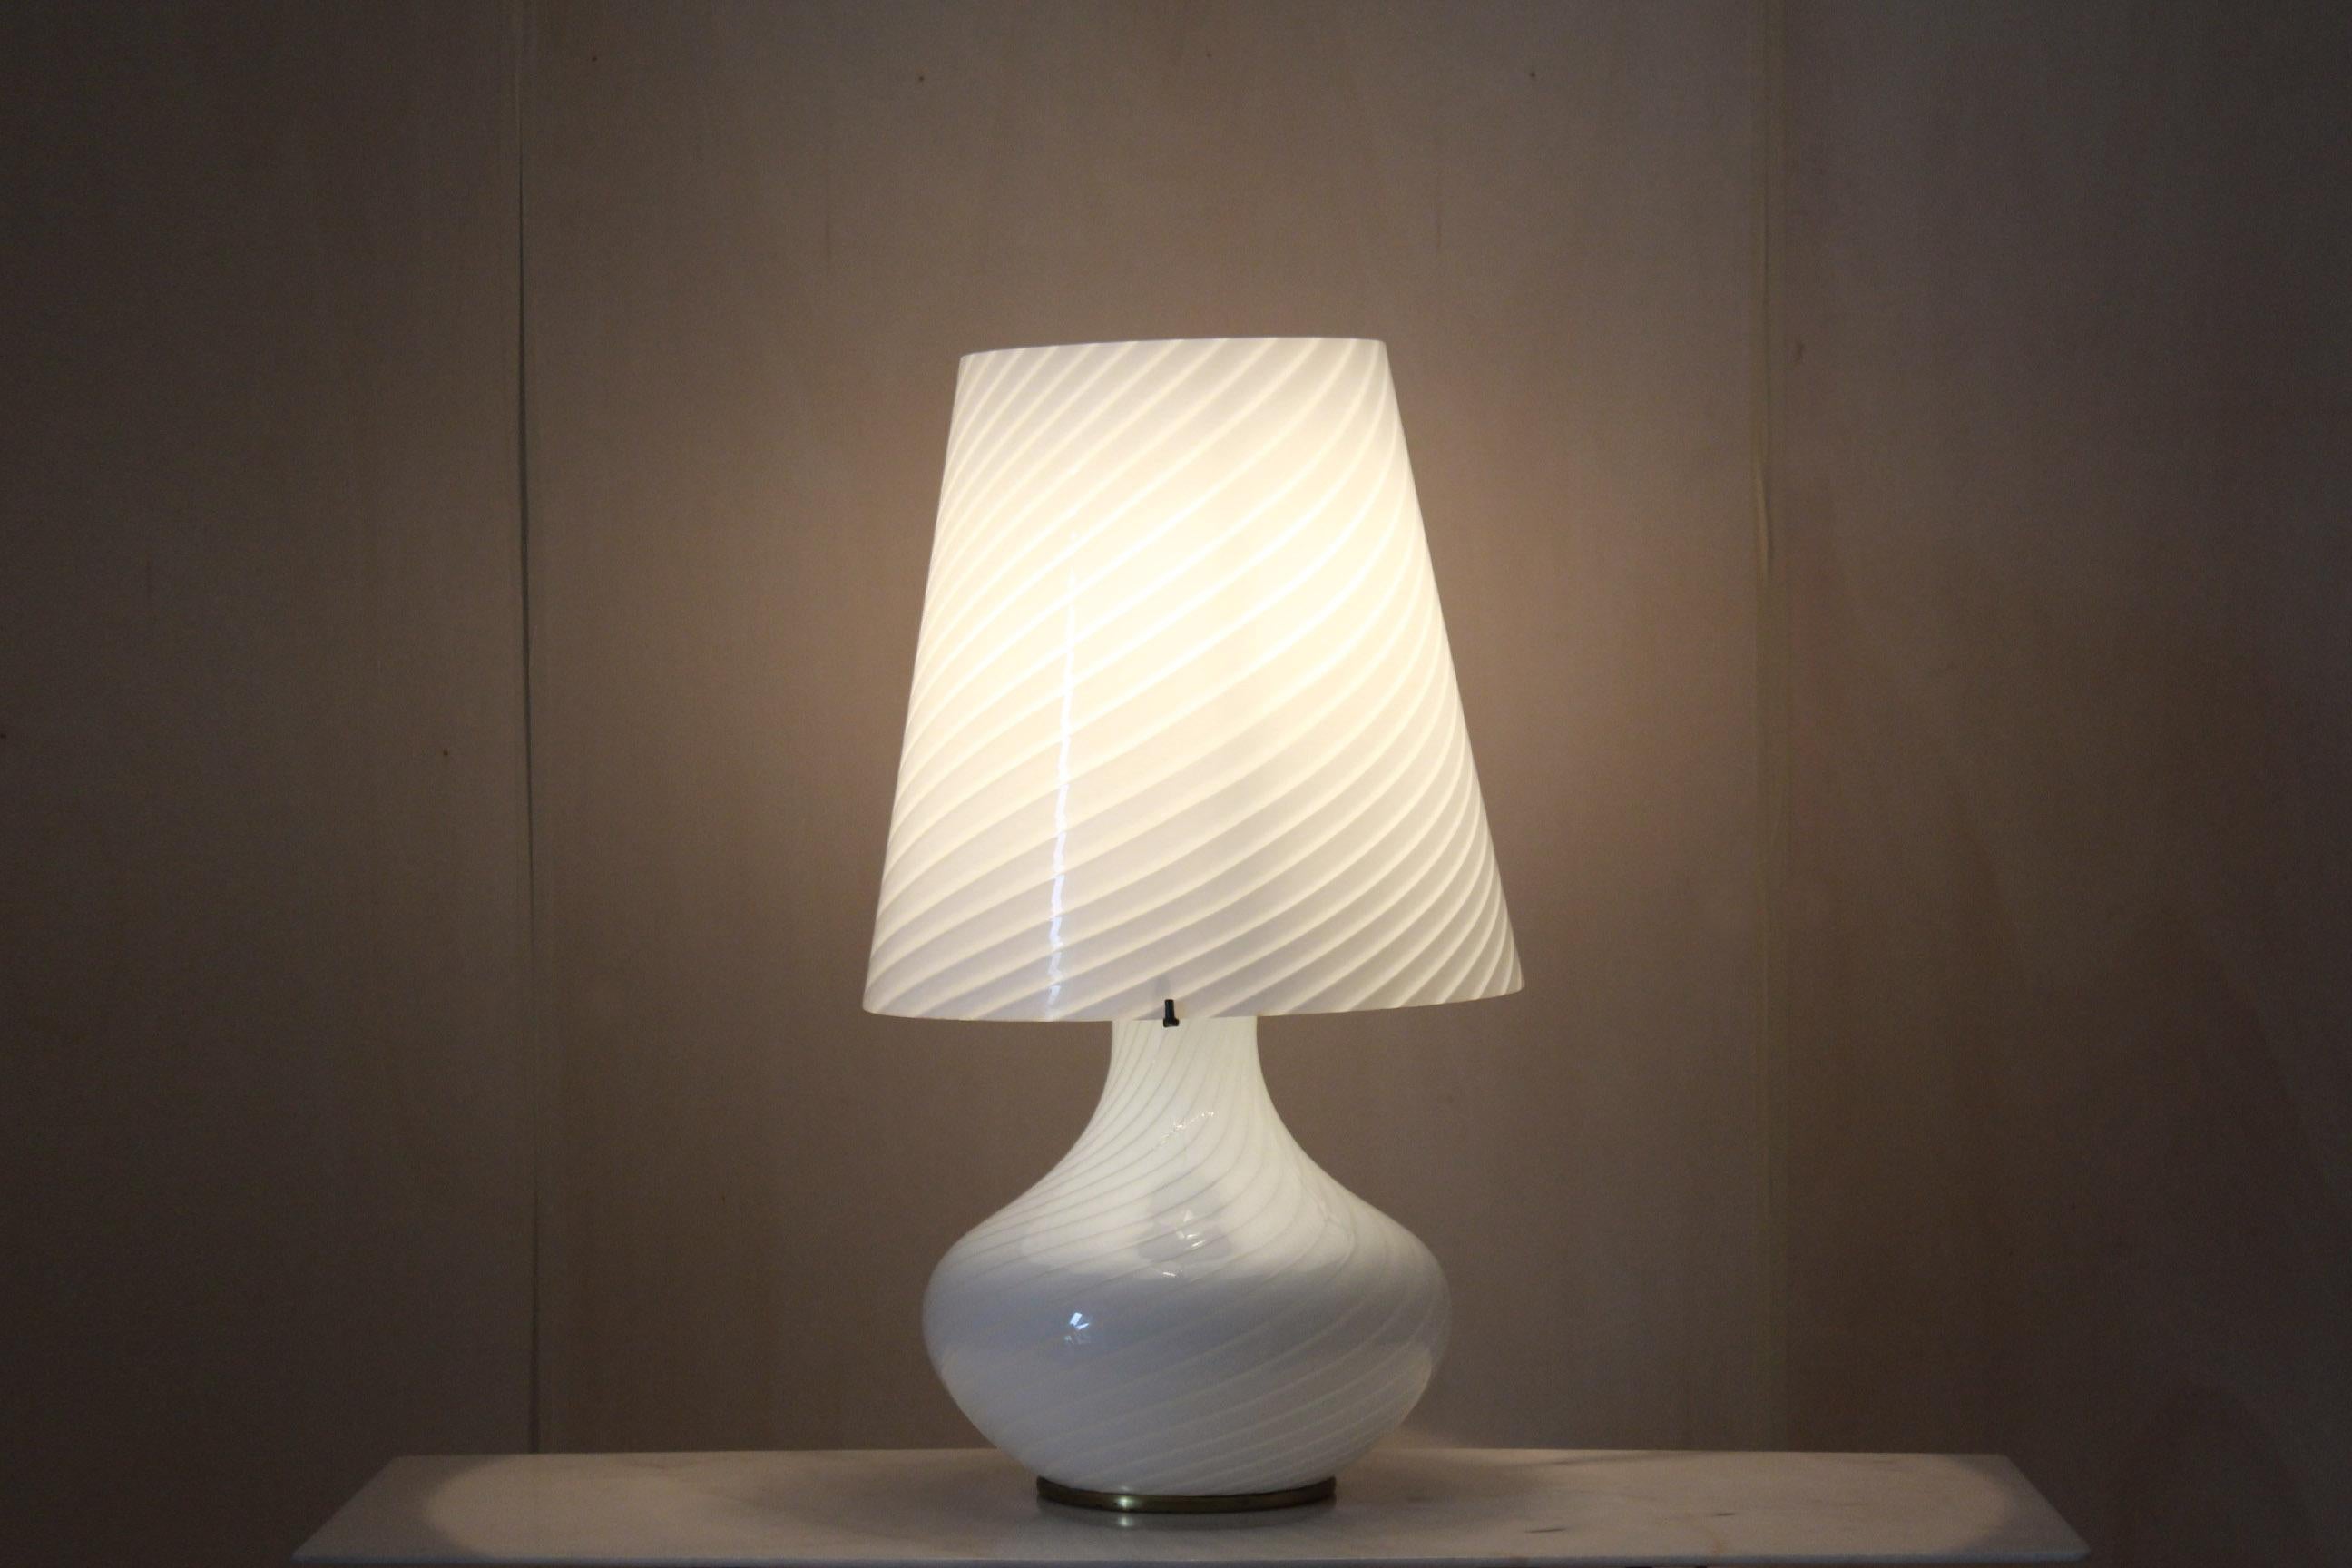 B Migurano table lamp from the 1970s produced by Italian company 